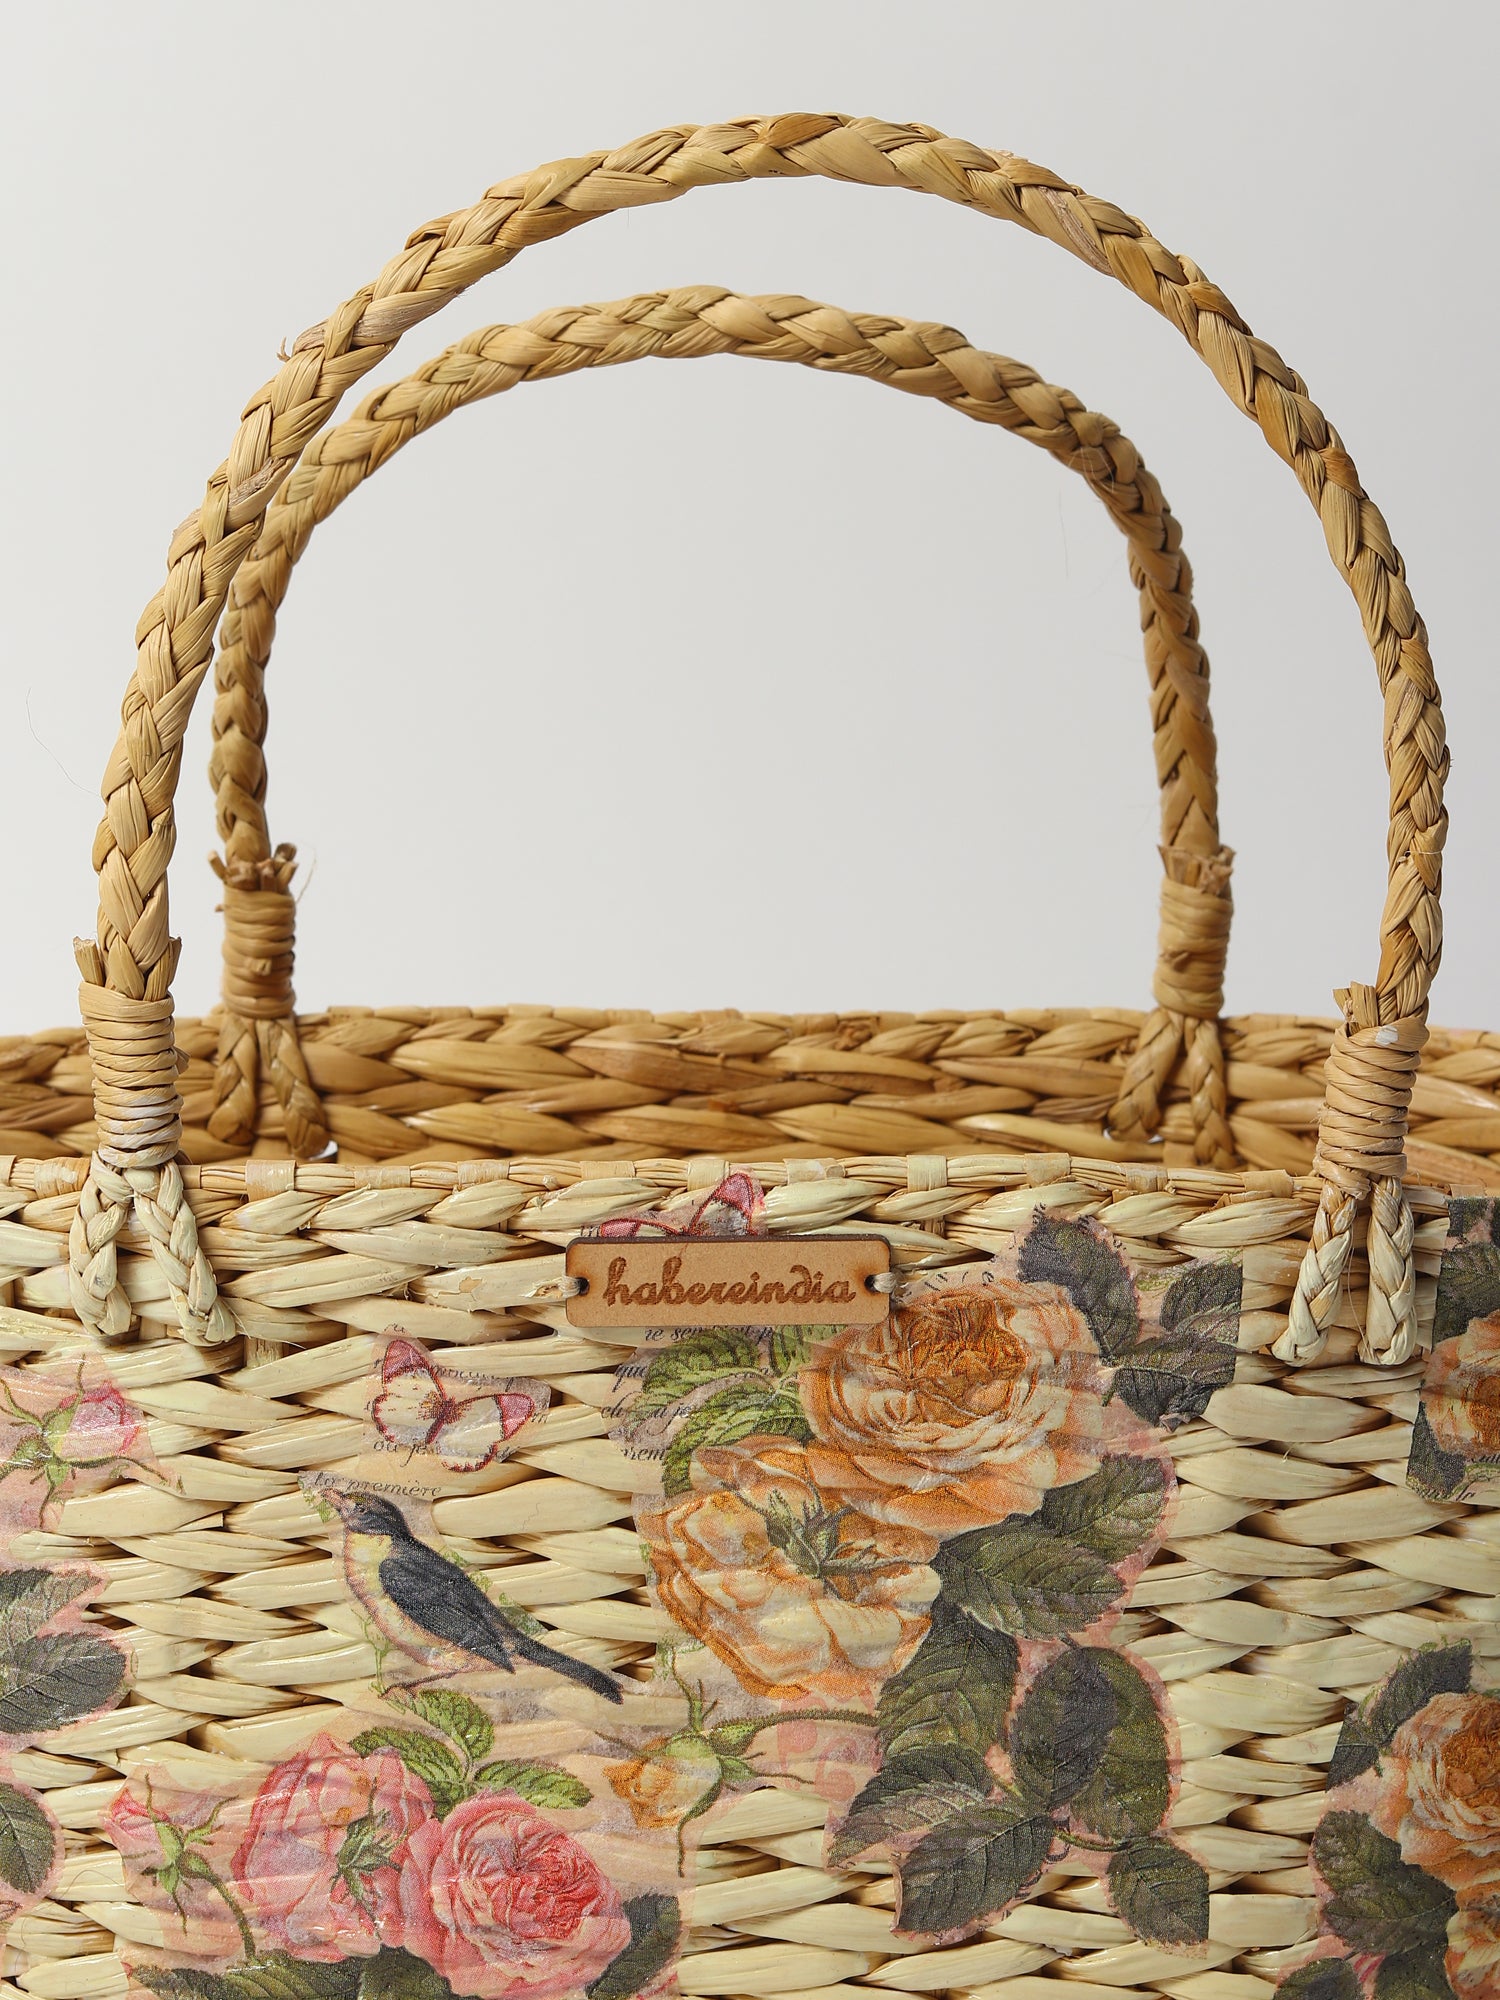 Premium Quality Gifting Basket